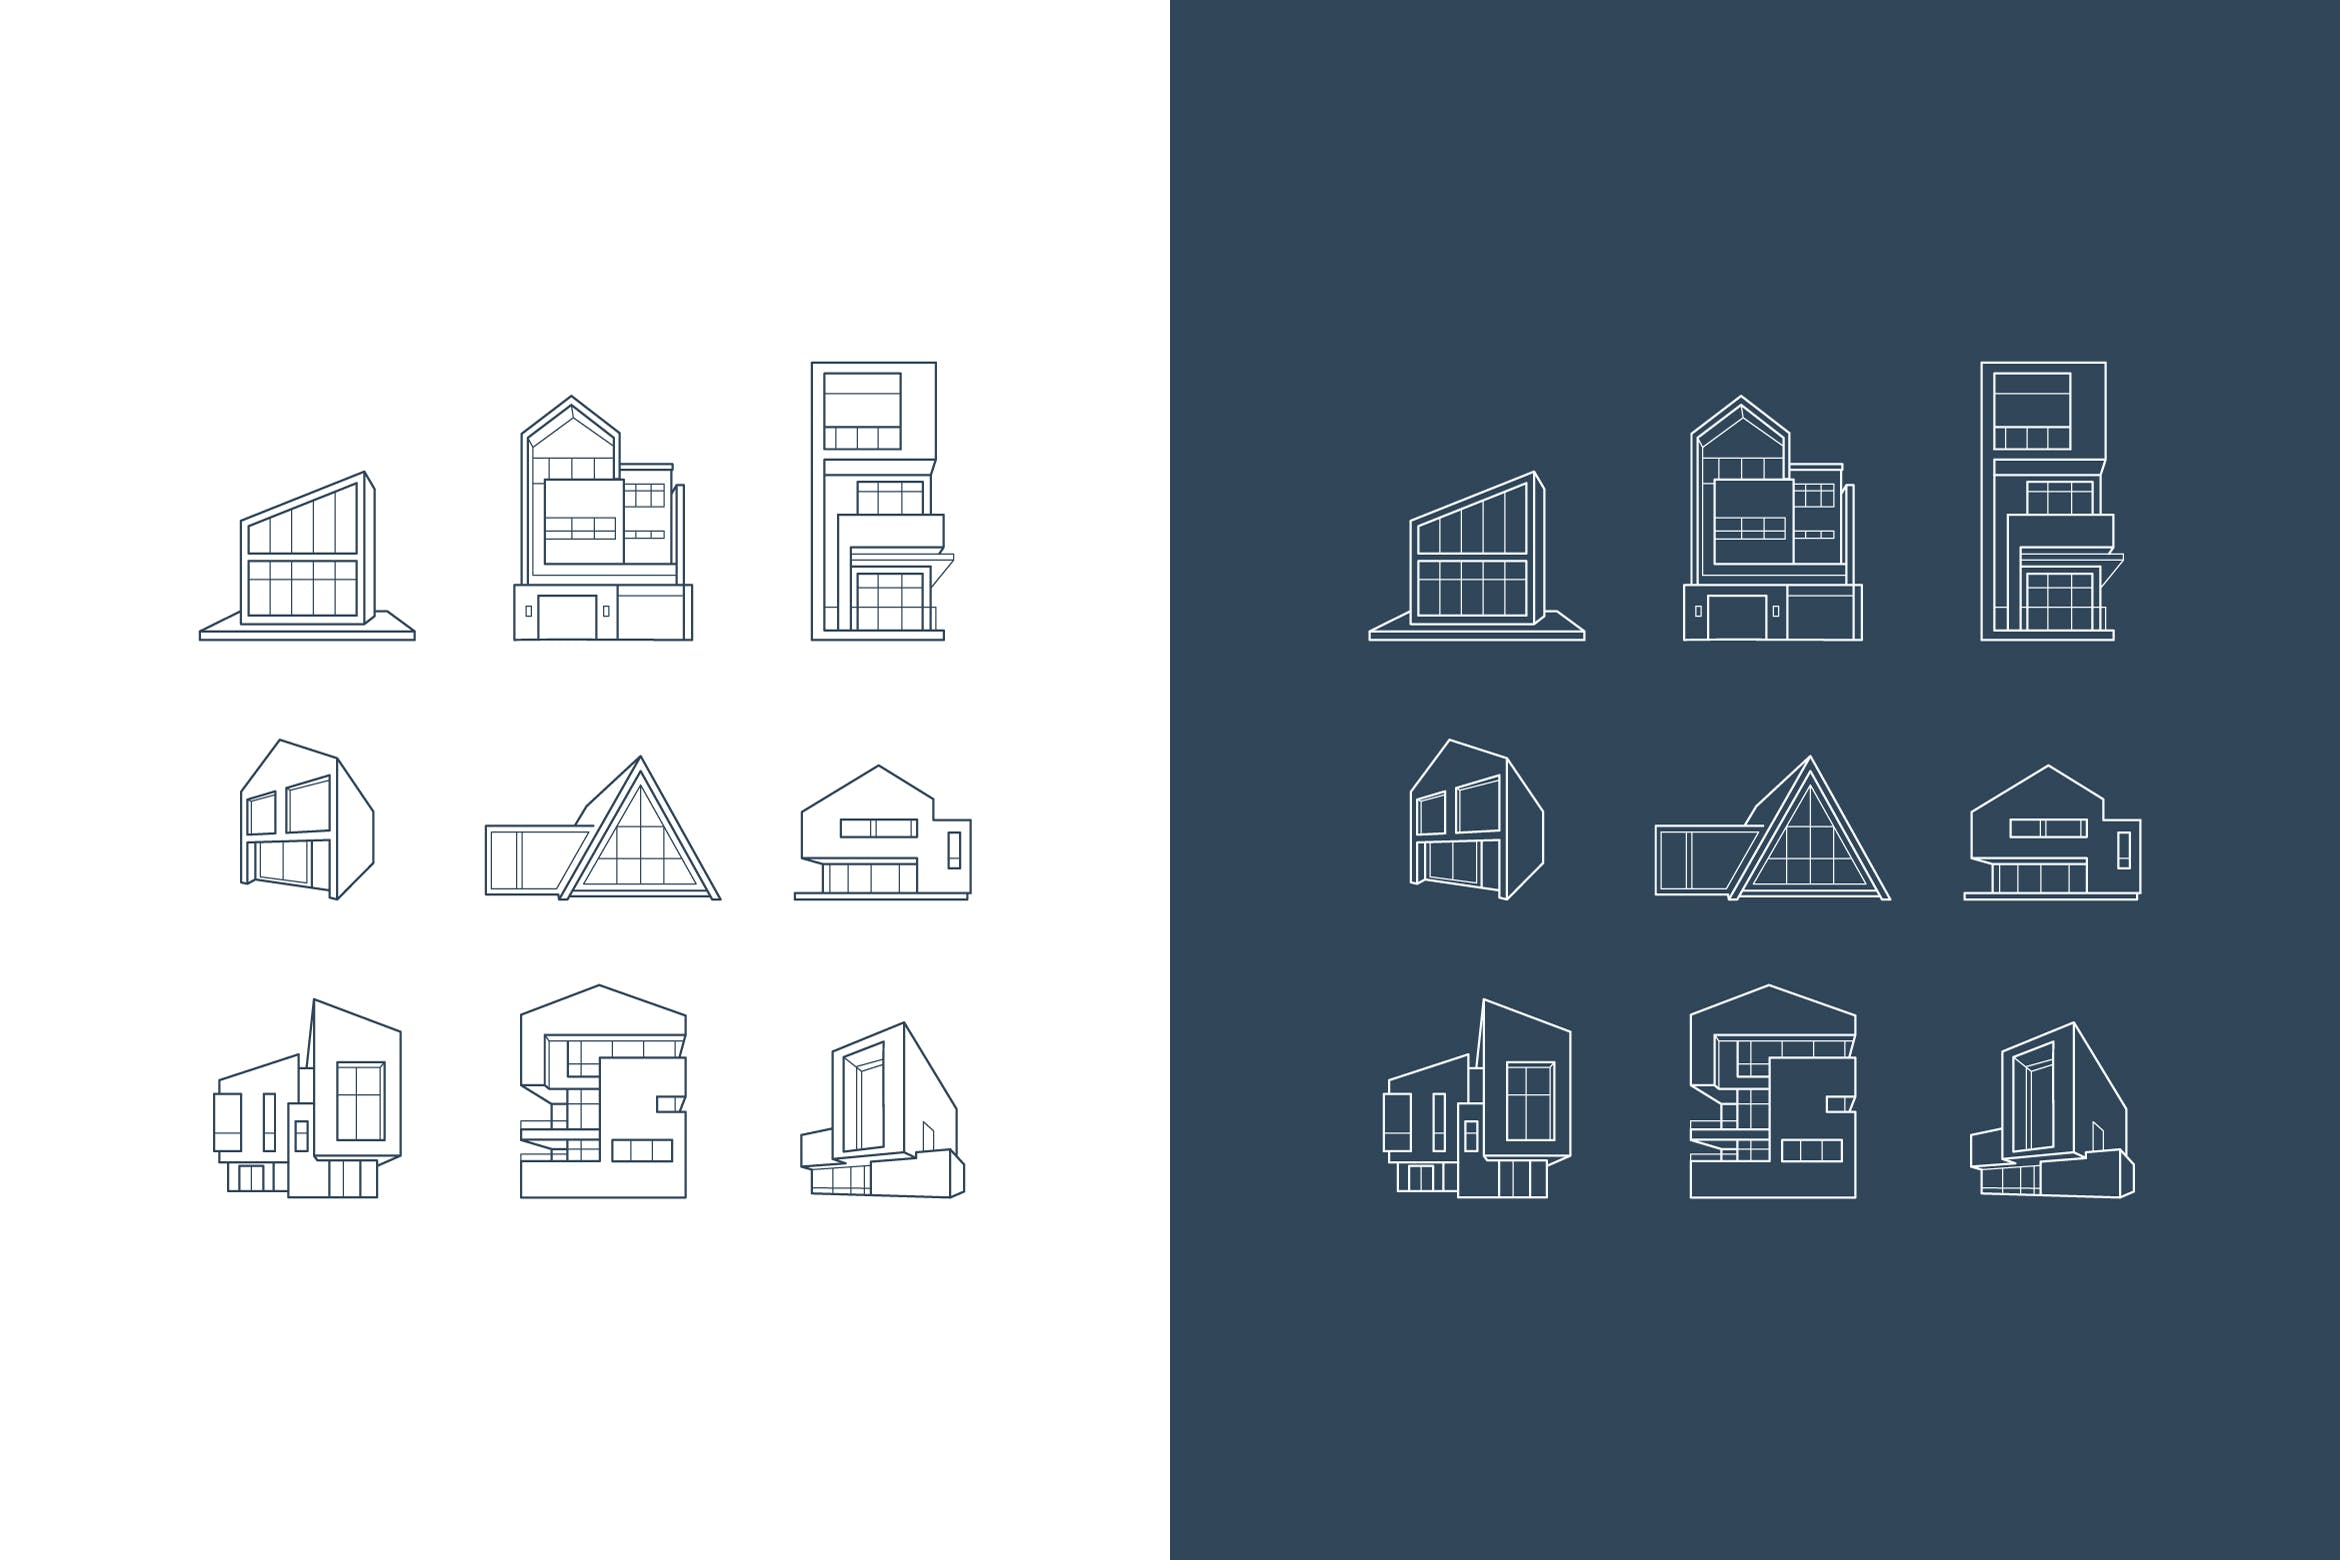 建筑房屋框架结构几何图形矢量素材库精选图标素材 vector logos of icons with architecture houses插图